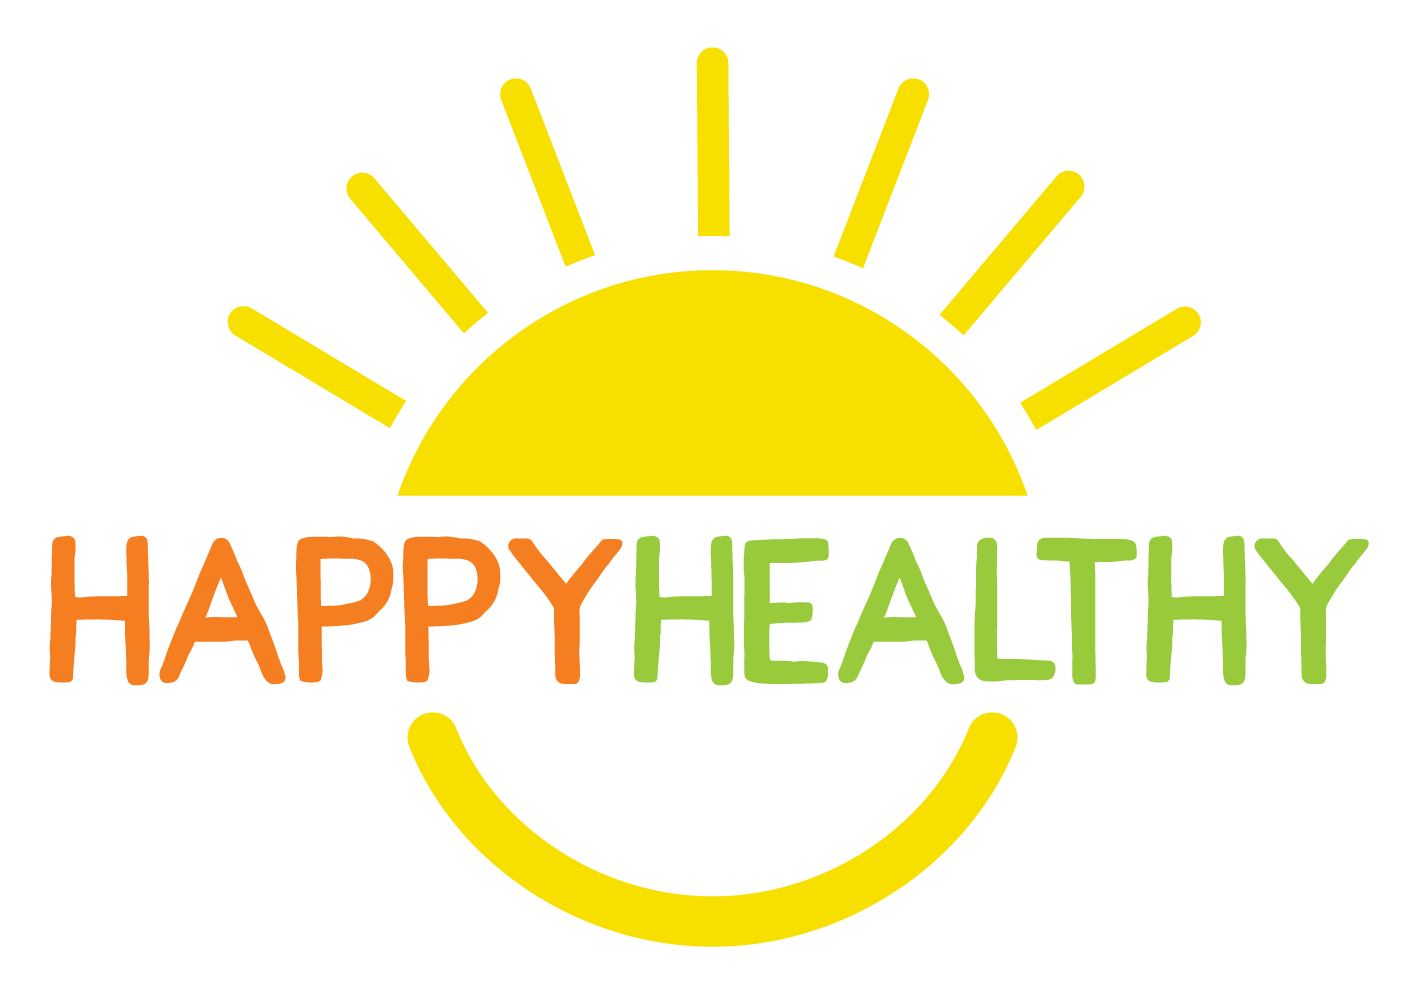 HappyHealthy logo.